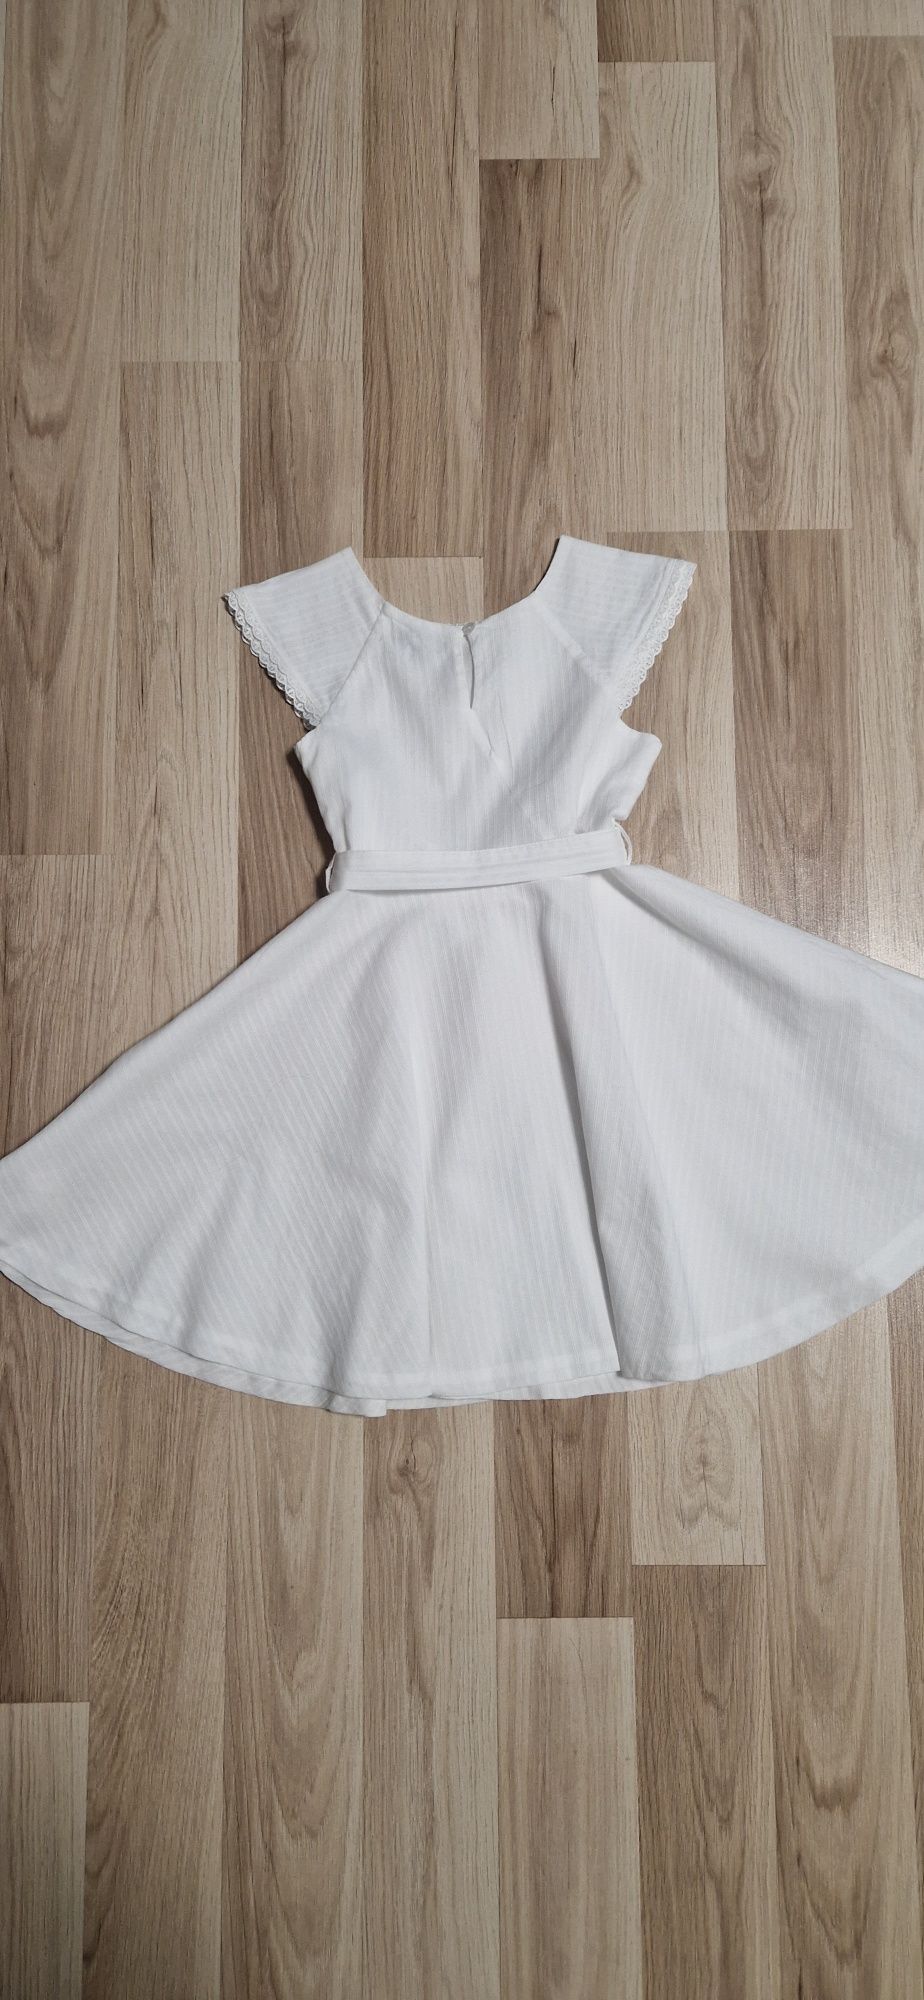 Sukienka biała na komunię piękna okaidi 8 lat 128 cm